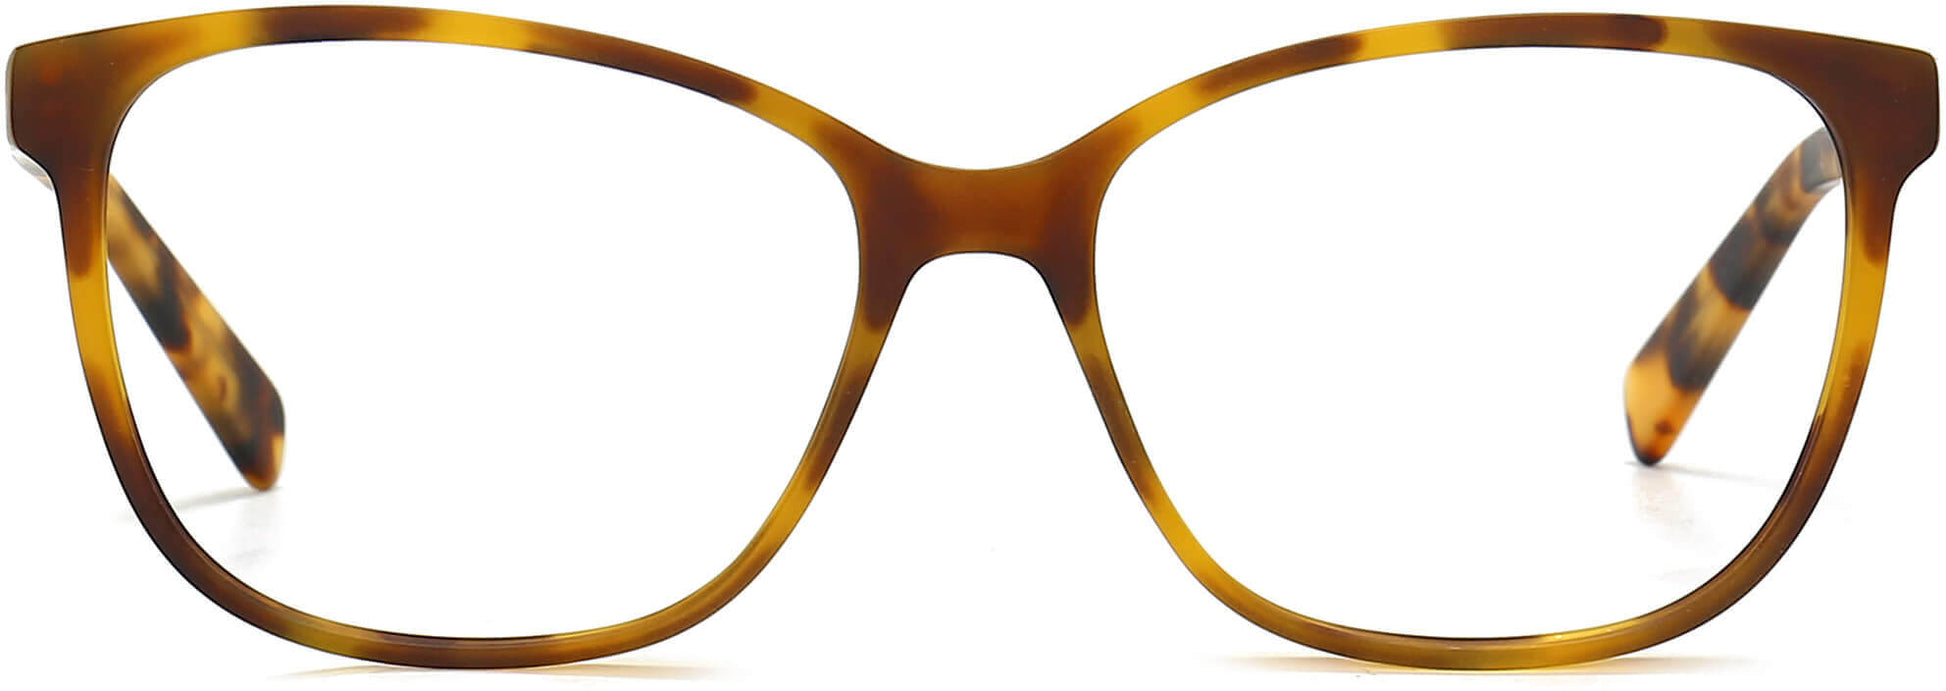 Madilynn Cateye Tortoise Eyeglasses from ANRRI, front view